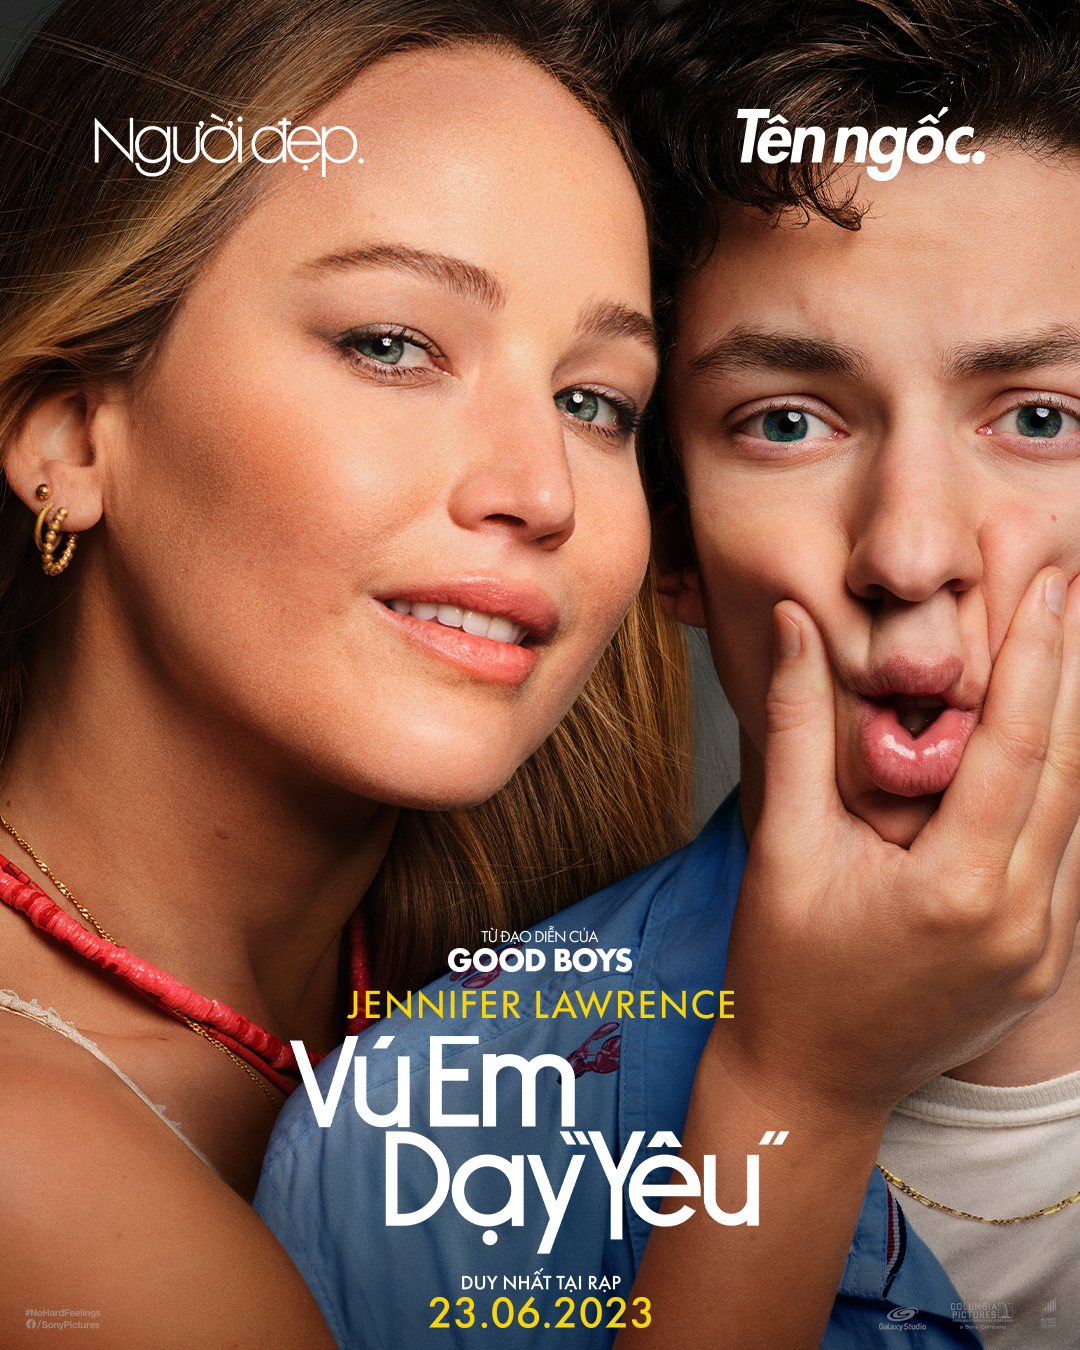 Harper's Bazaar_Phim Vú Em Dạy Yêu của Jennifer Lawrence_02